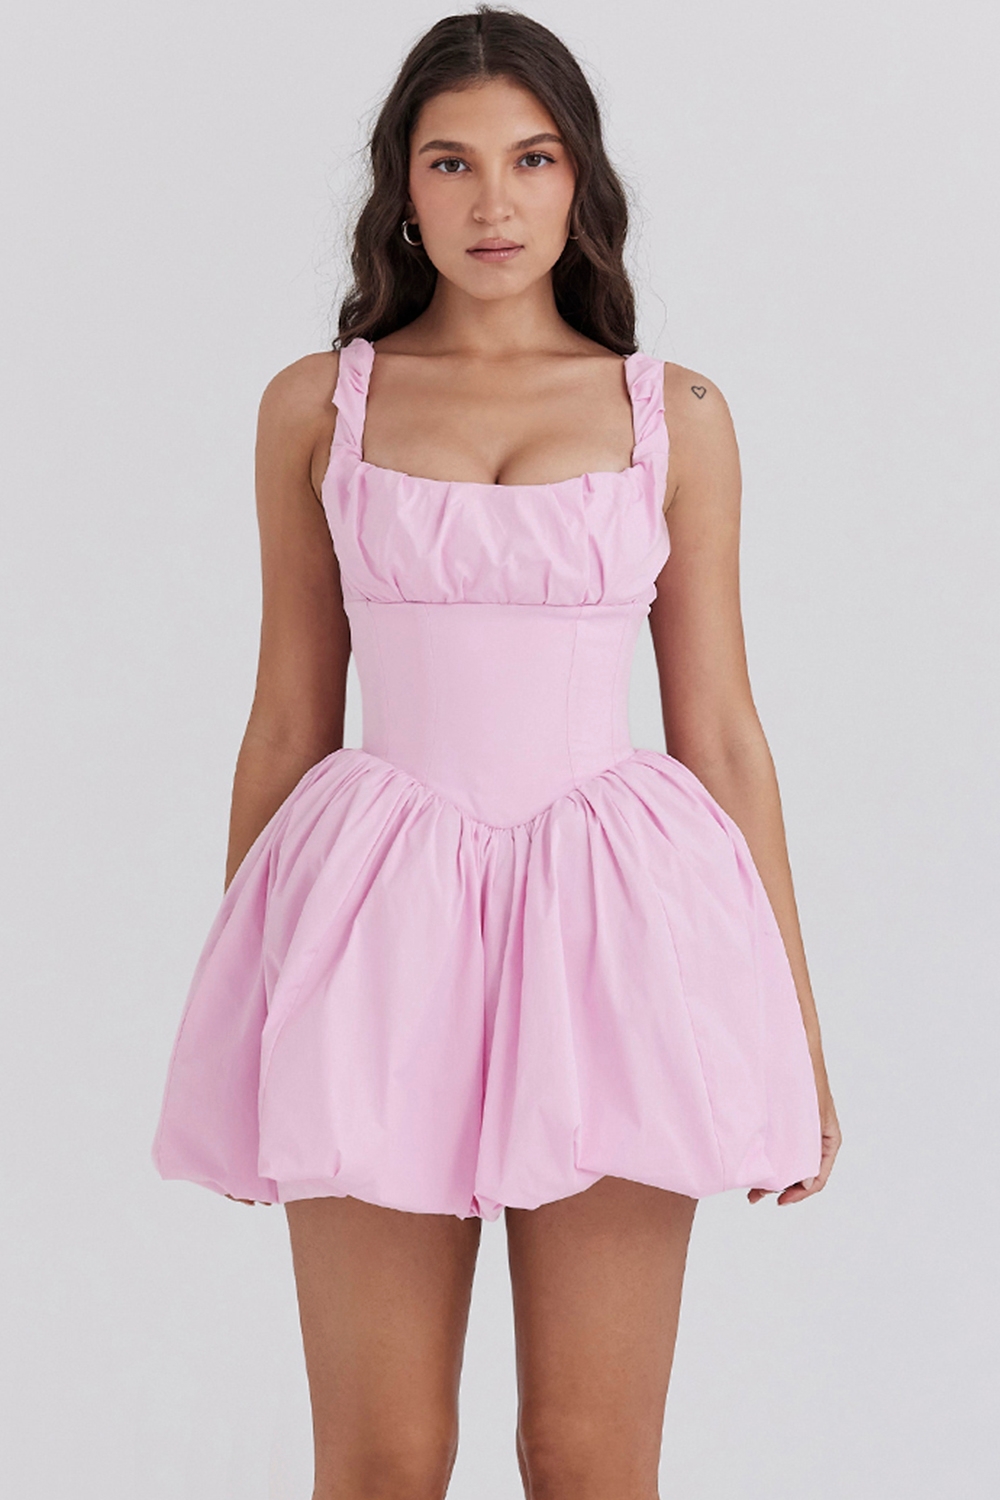 Le Puff, Cotton Candy Cotton Tulle Mini Dress